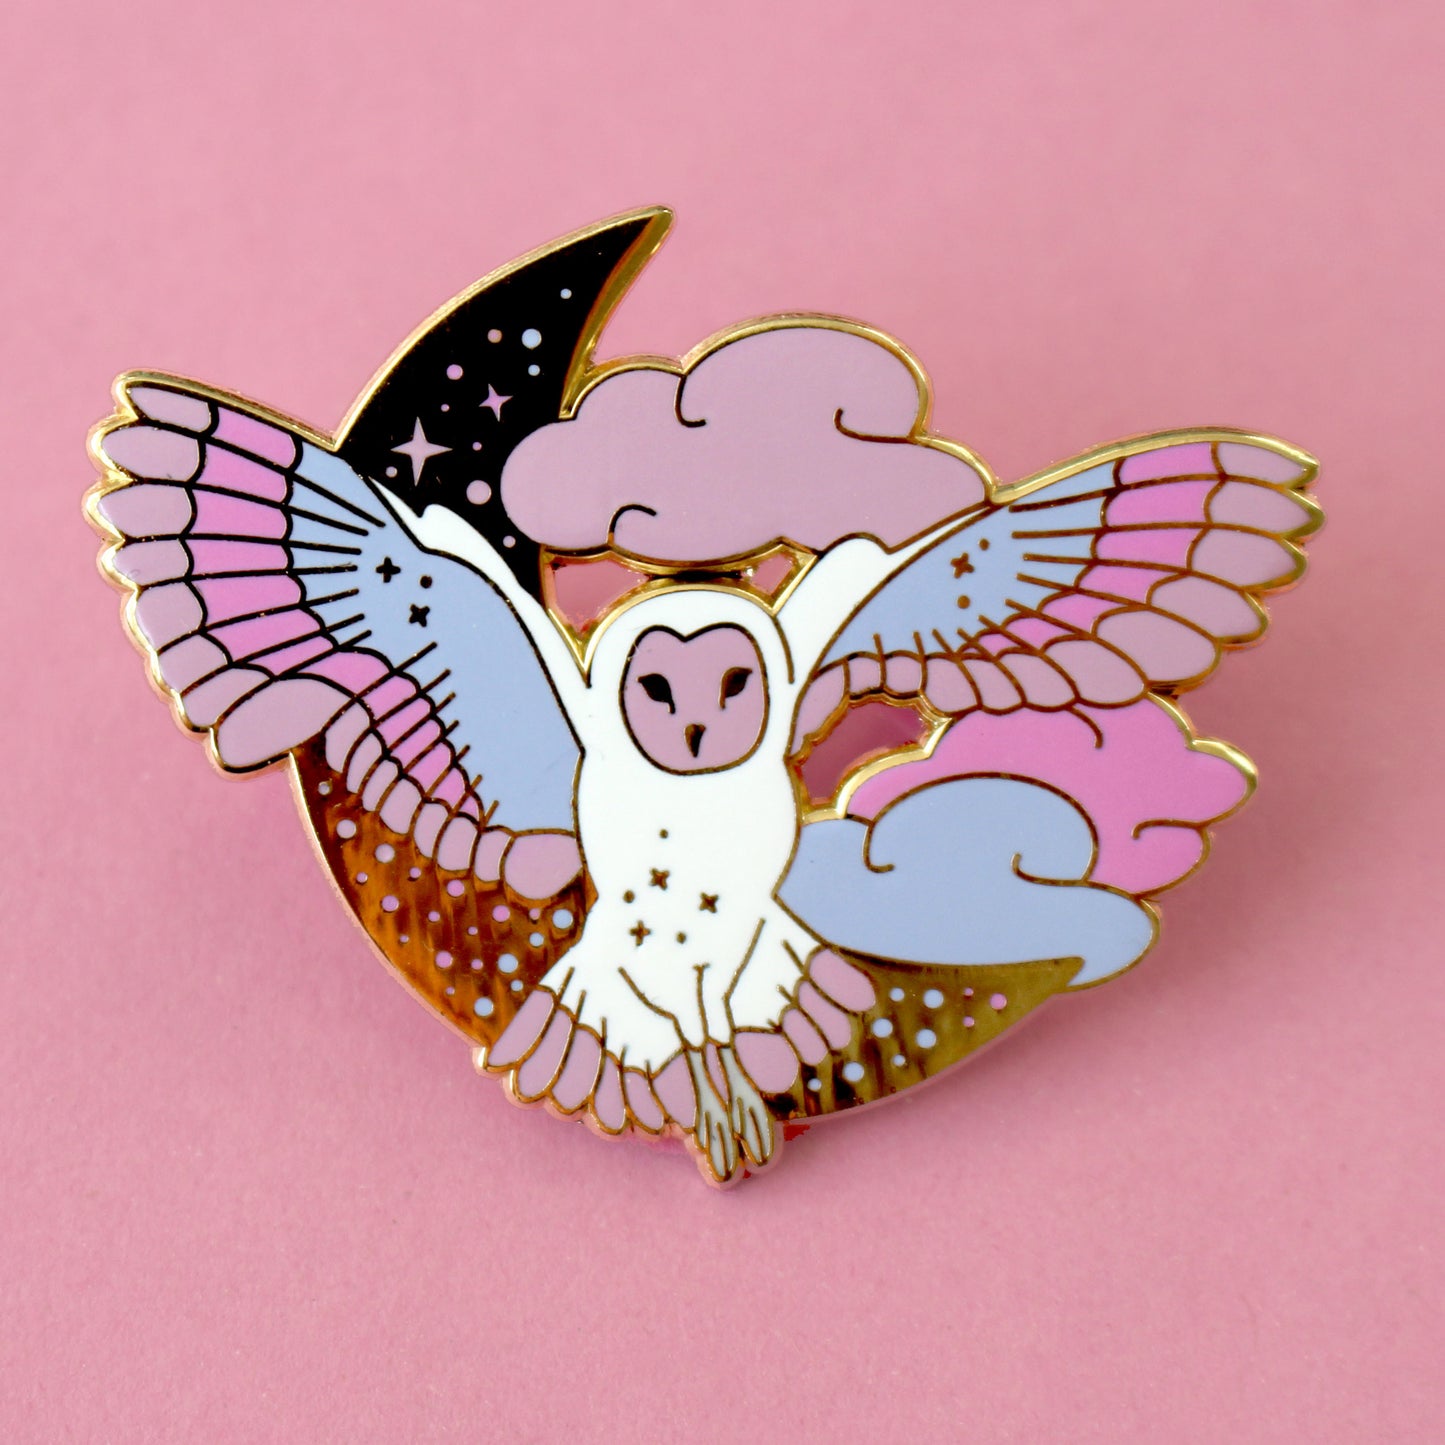 The Midnight Owl enamel pin